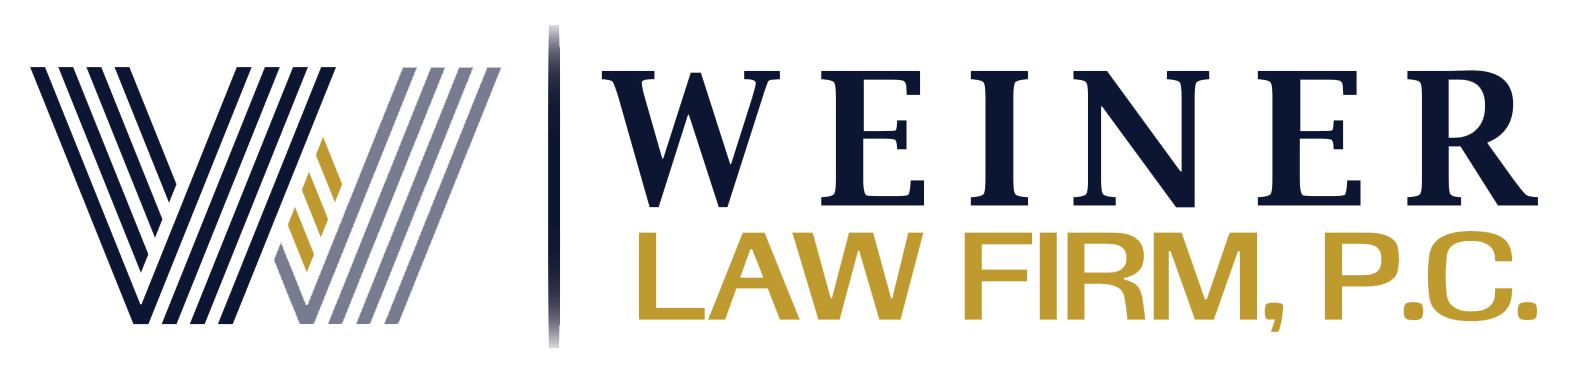 Weiner Law Firm PC Logo for website